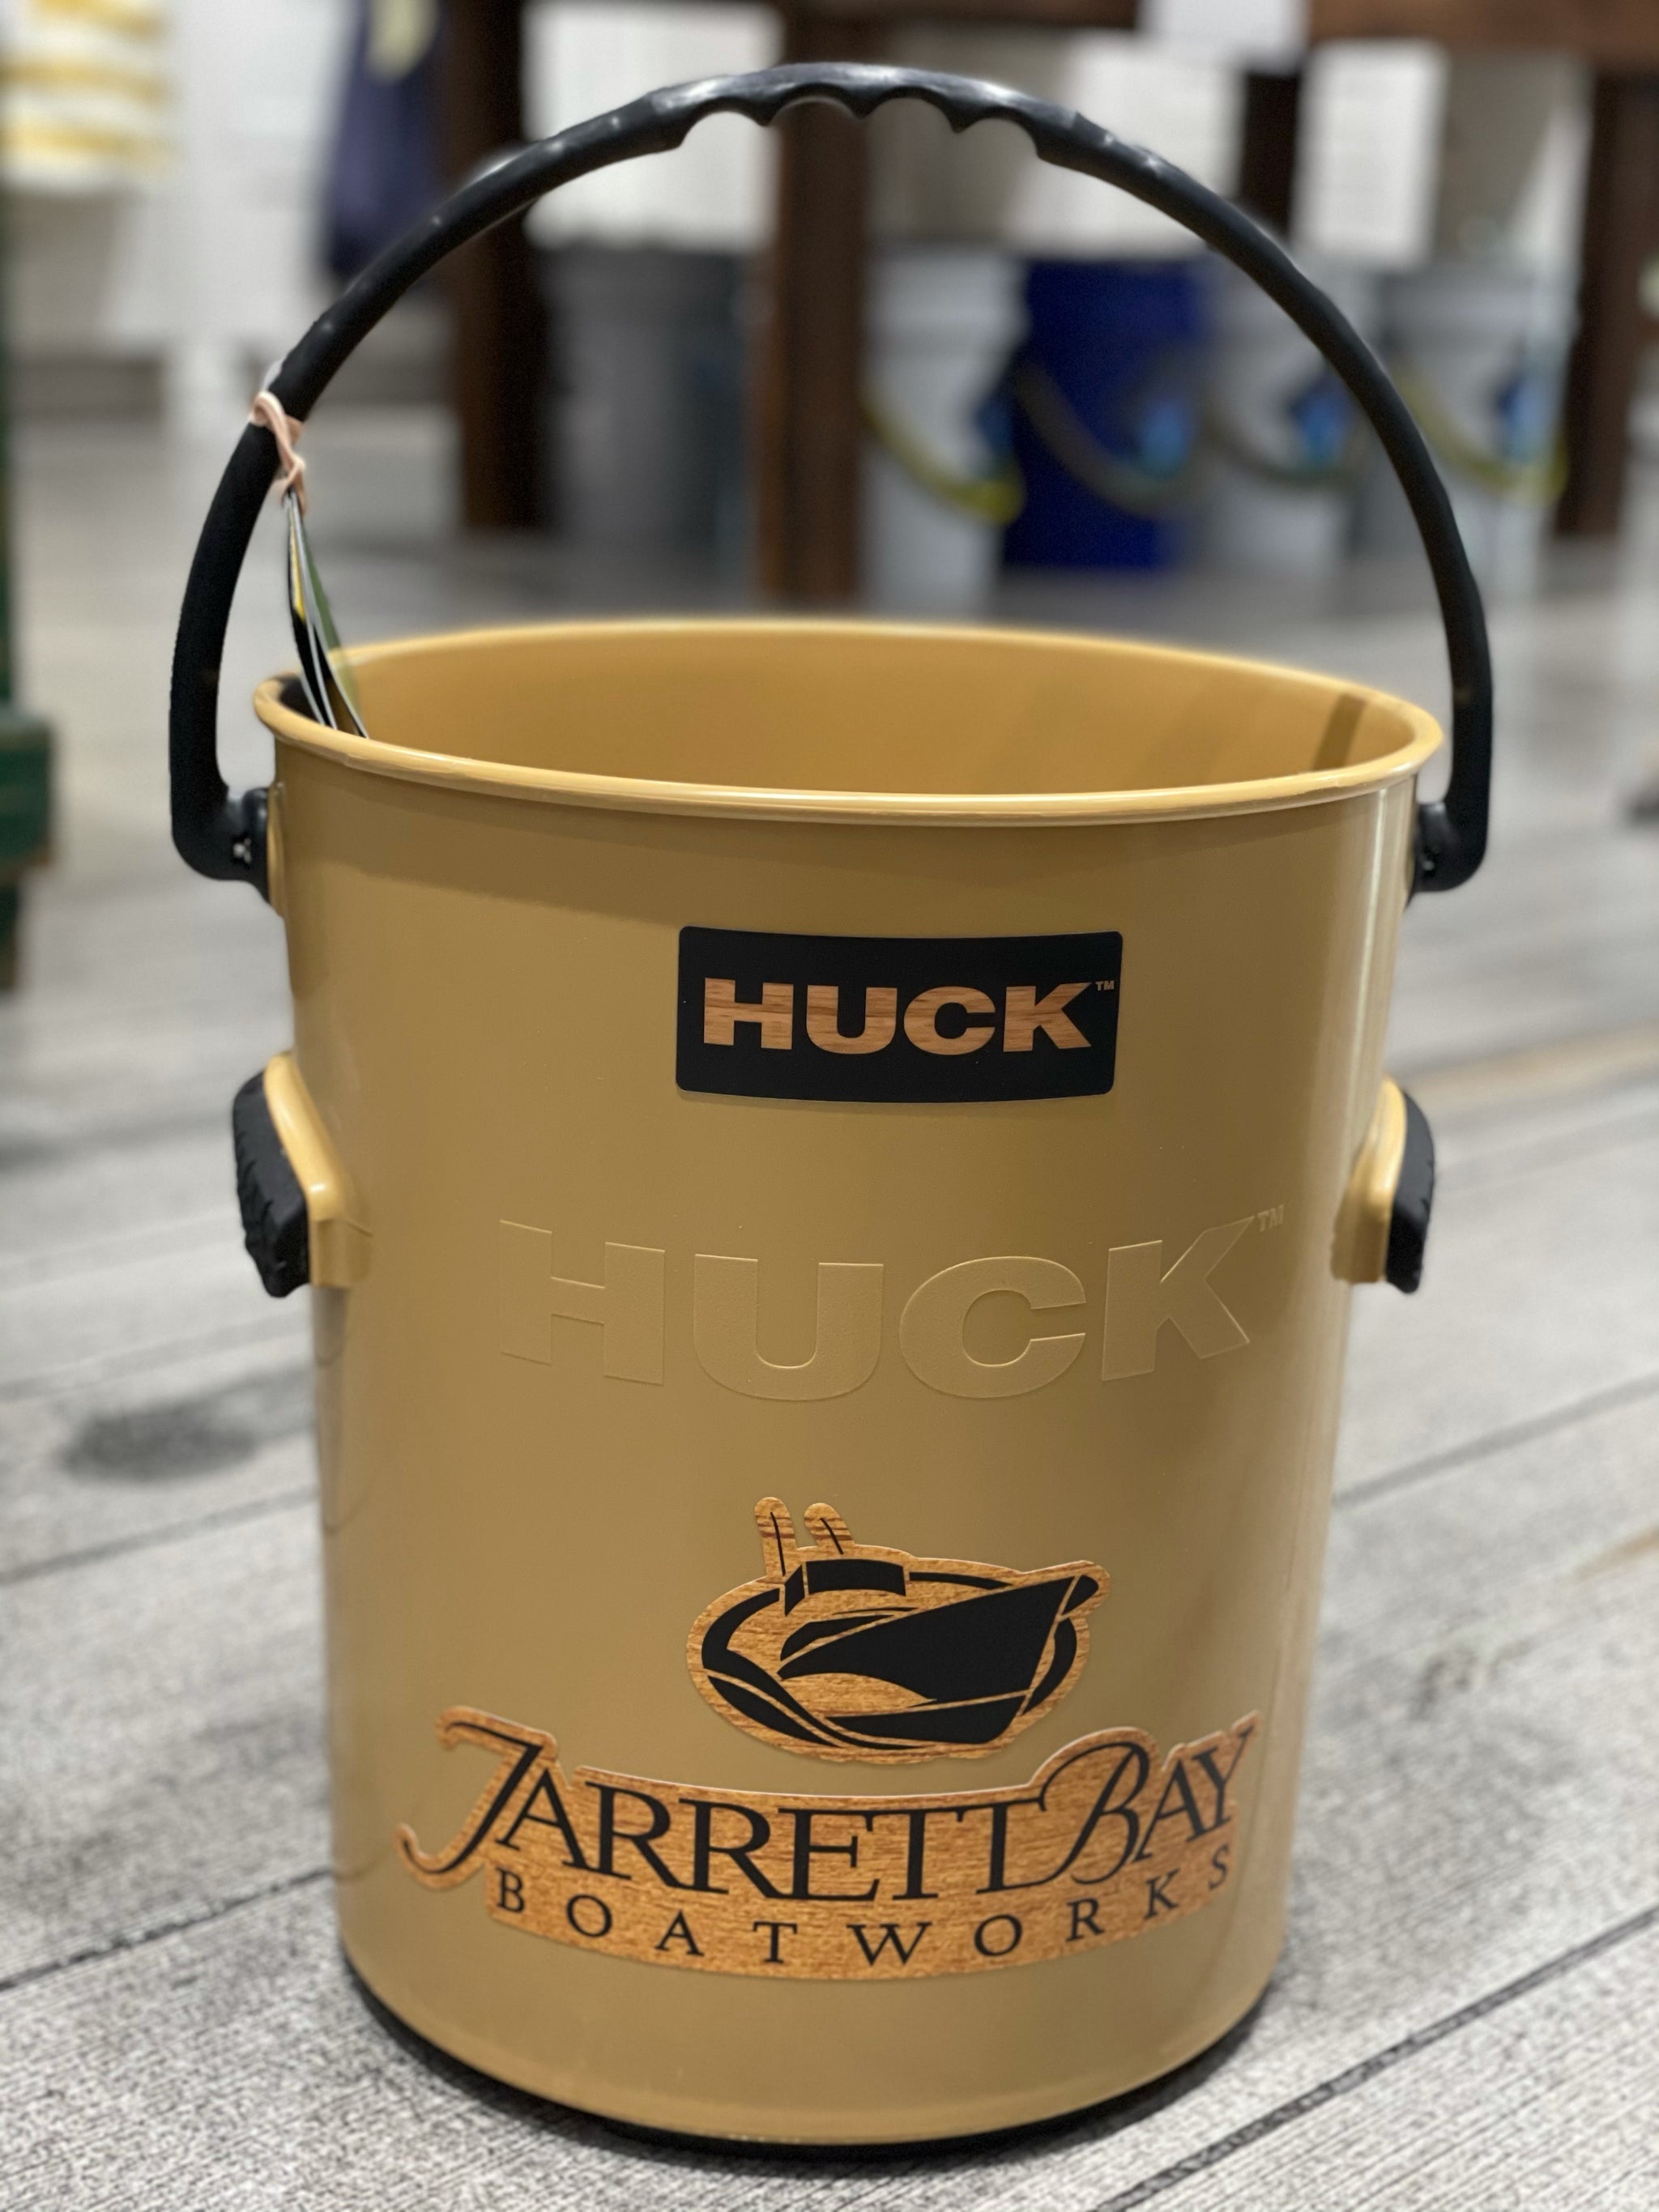 HUCK Performance Bucket - The HUCK Bucket